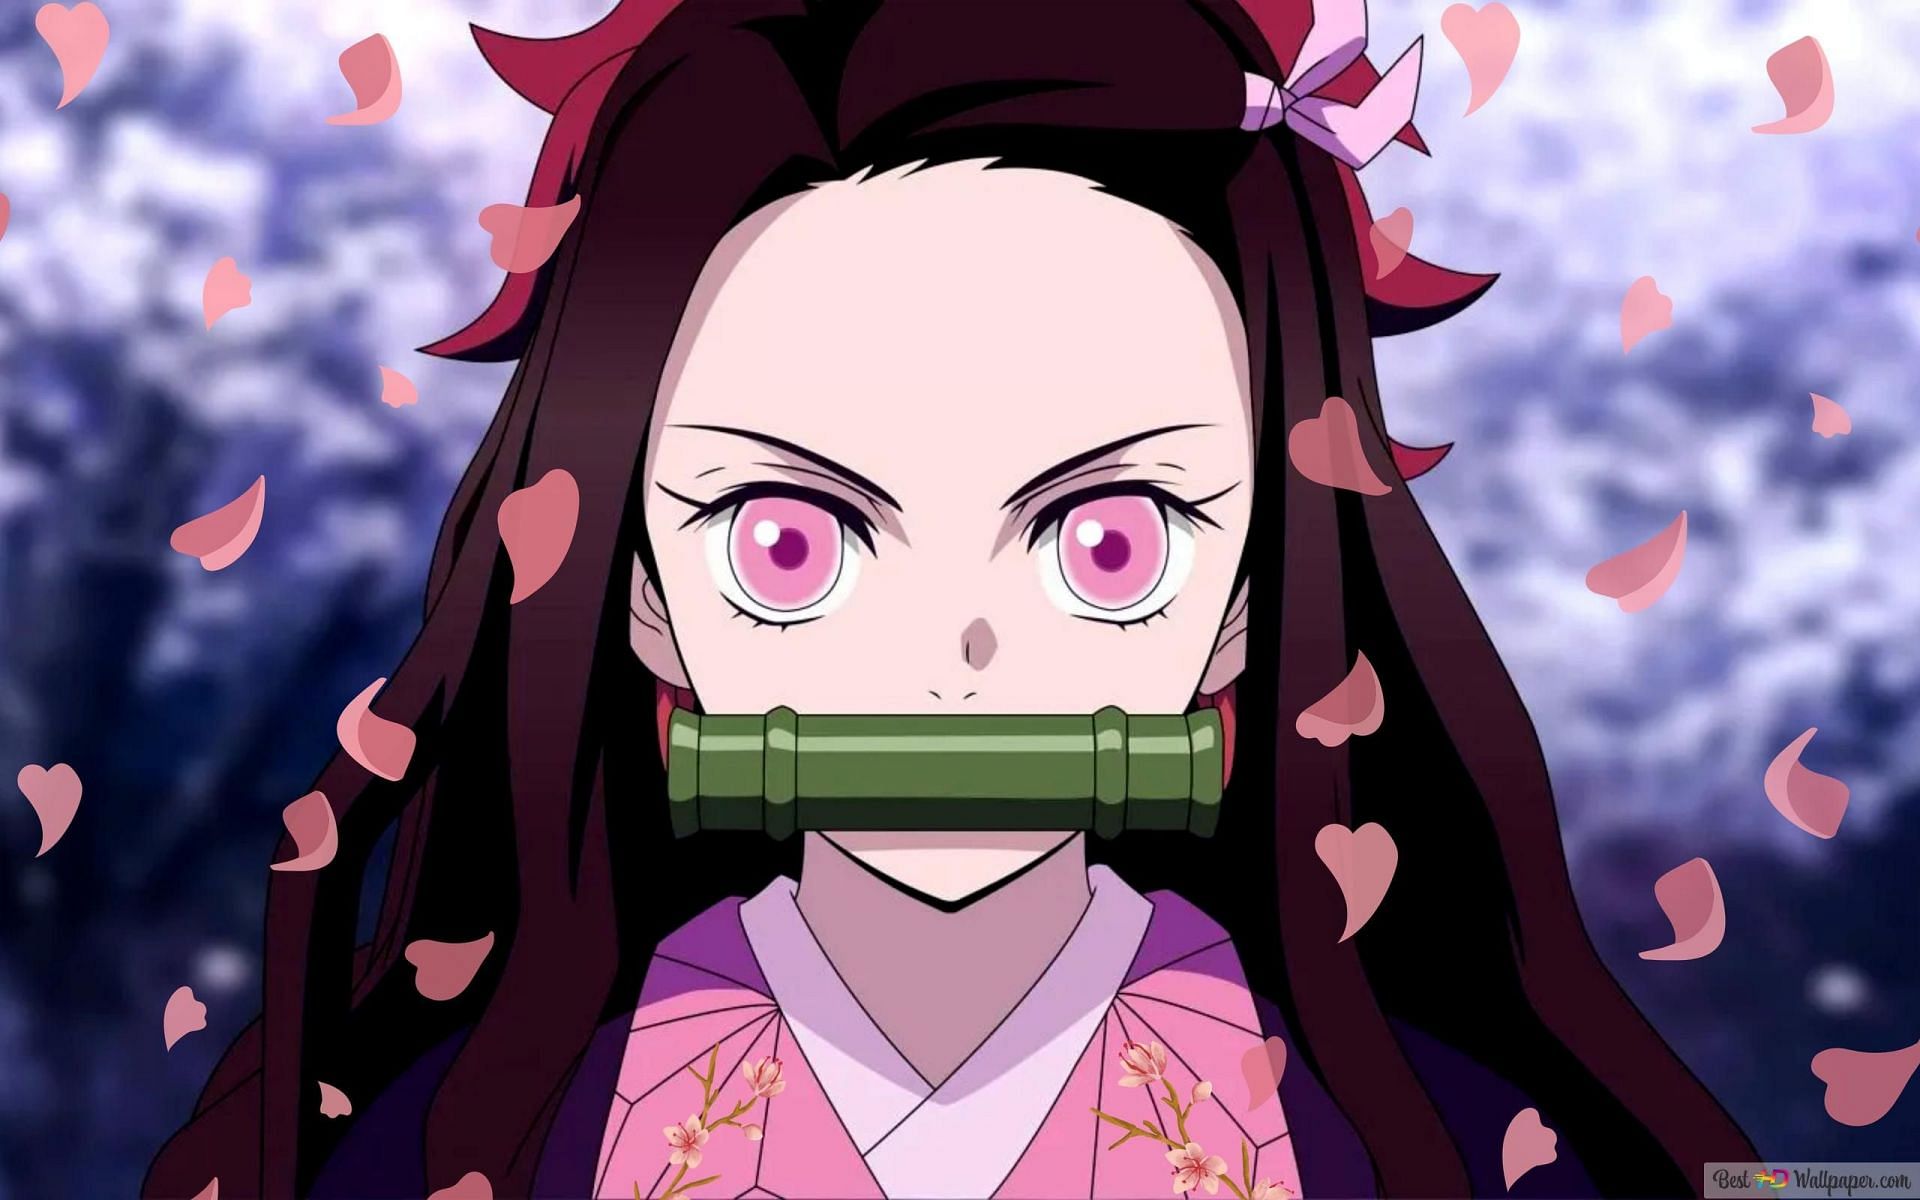 Nezuko Kamado as seen in the Demon Slayer series (Image via Ufotable)